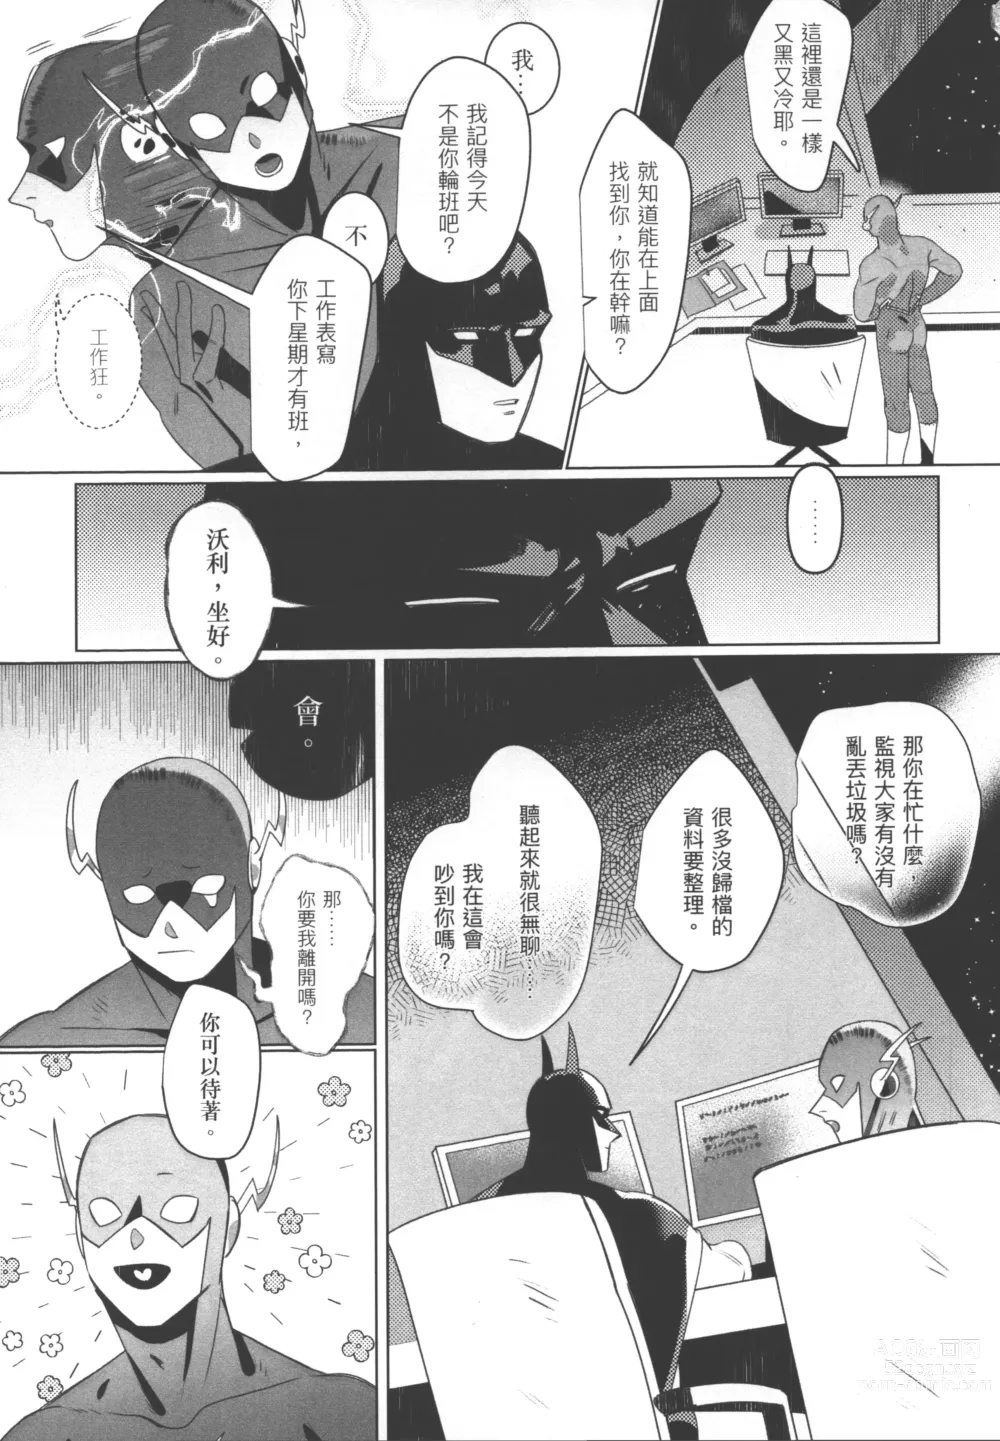 Page 4 of doujinshi Flash Appreciation Day